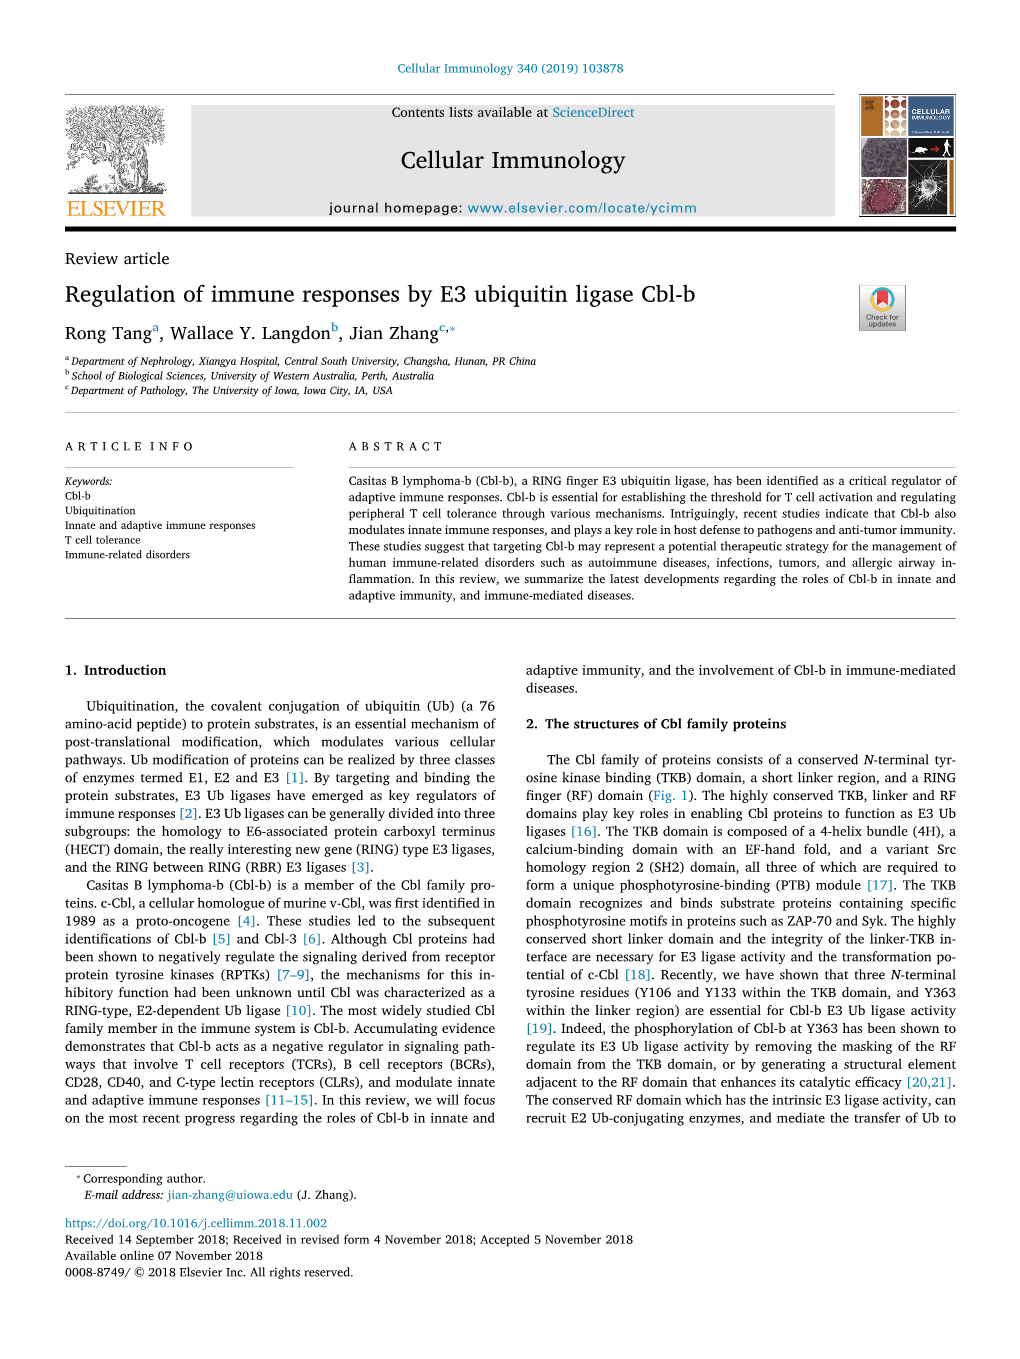 Cellular Immunology Regulation of Immune Responses by E3 Ubiquitin